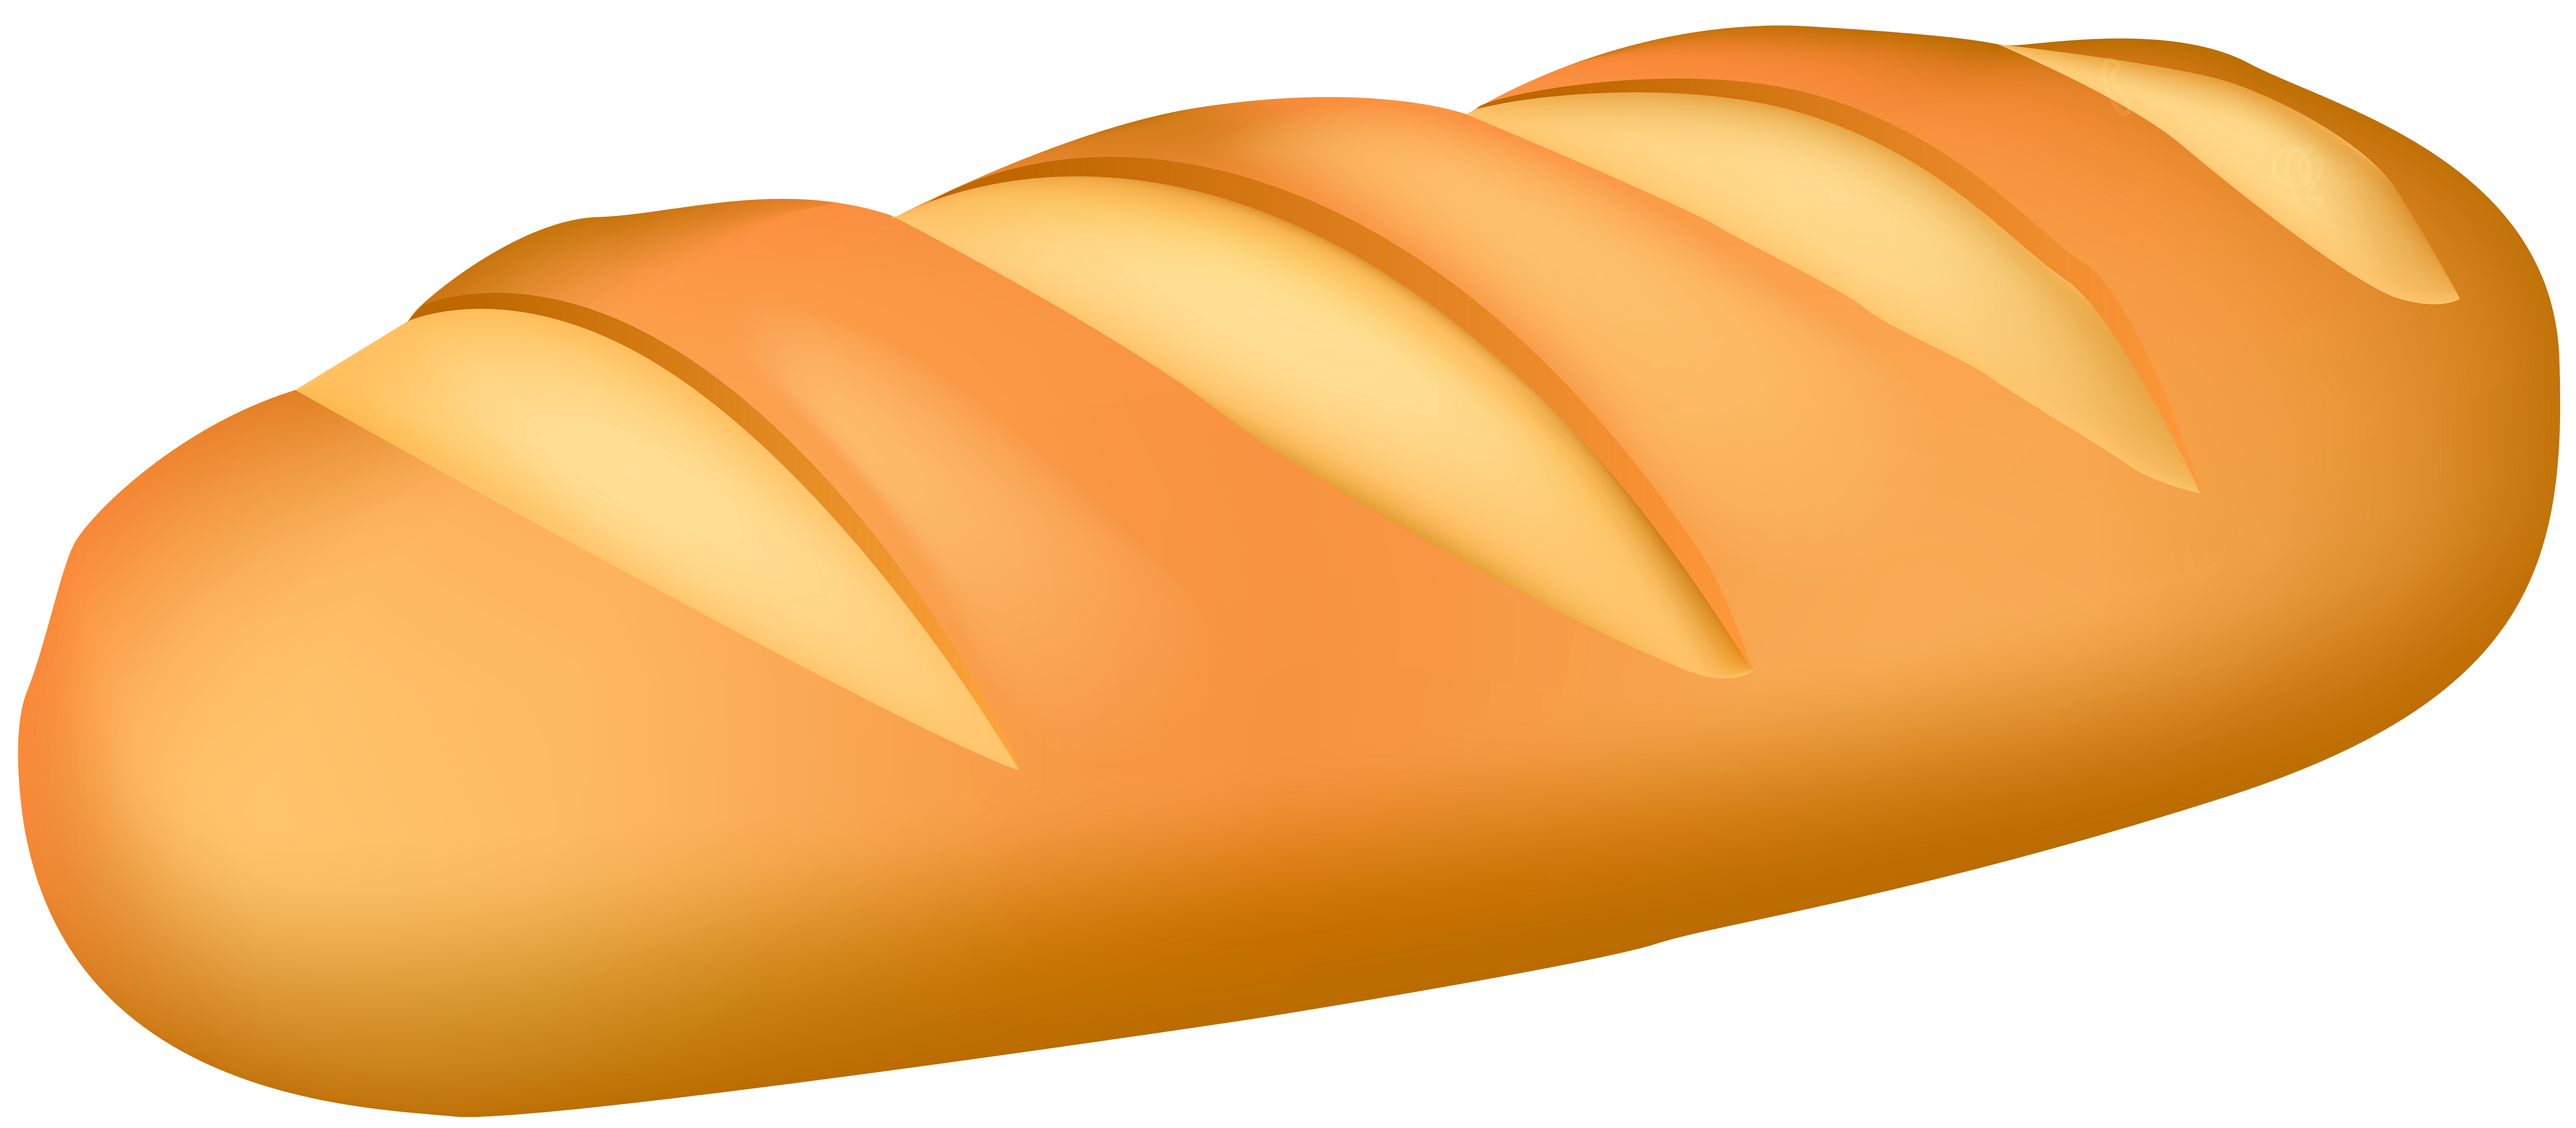 bread illustration free download